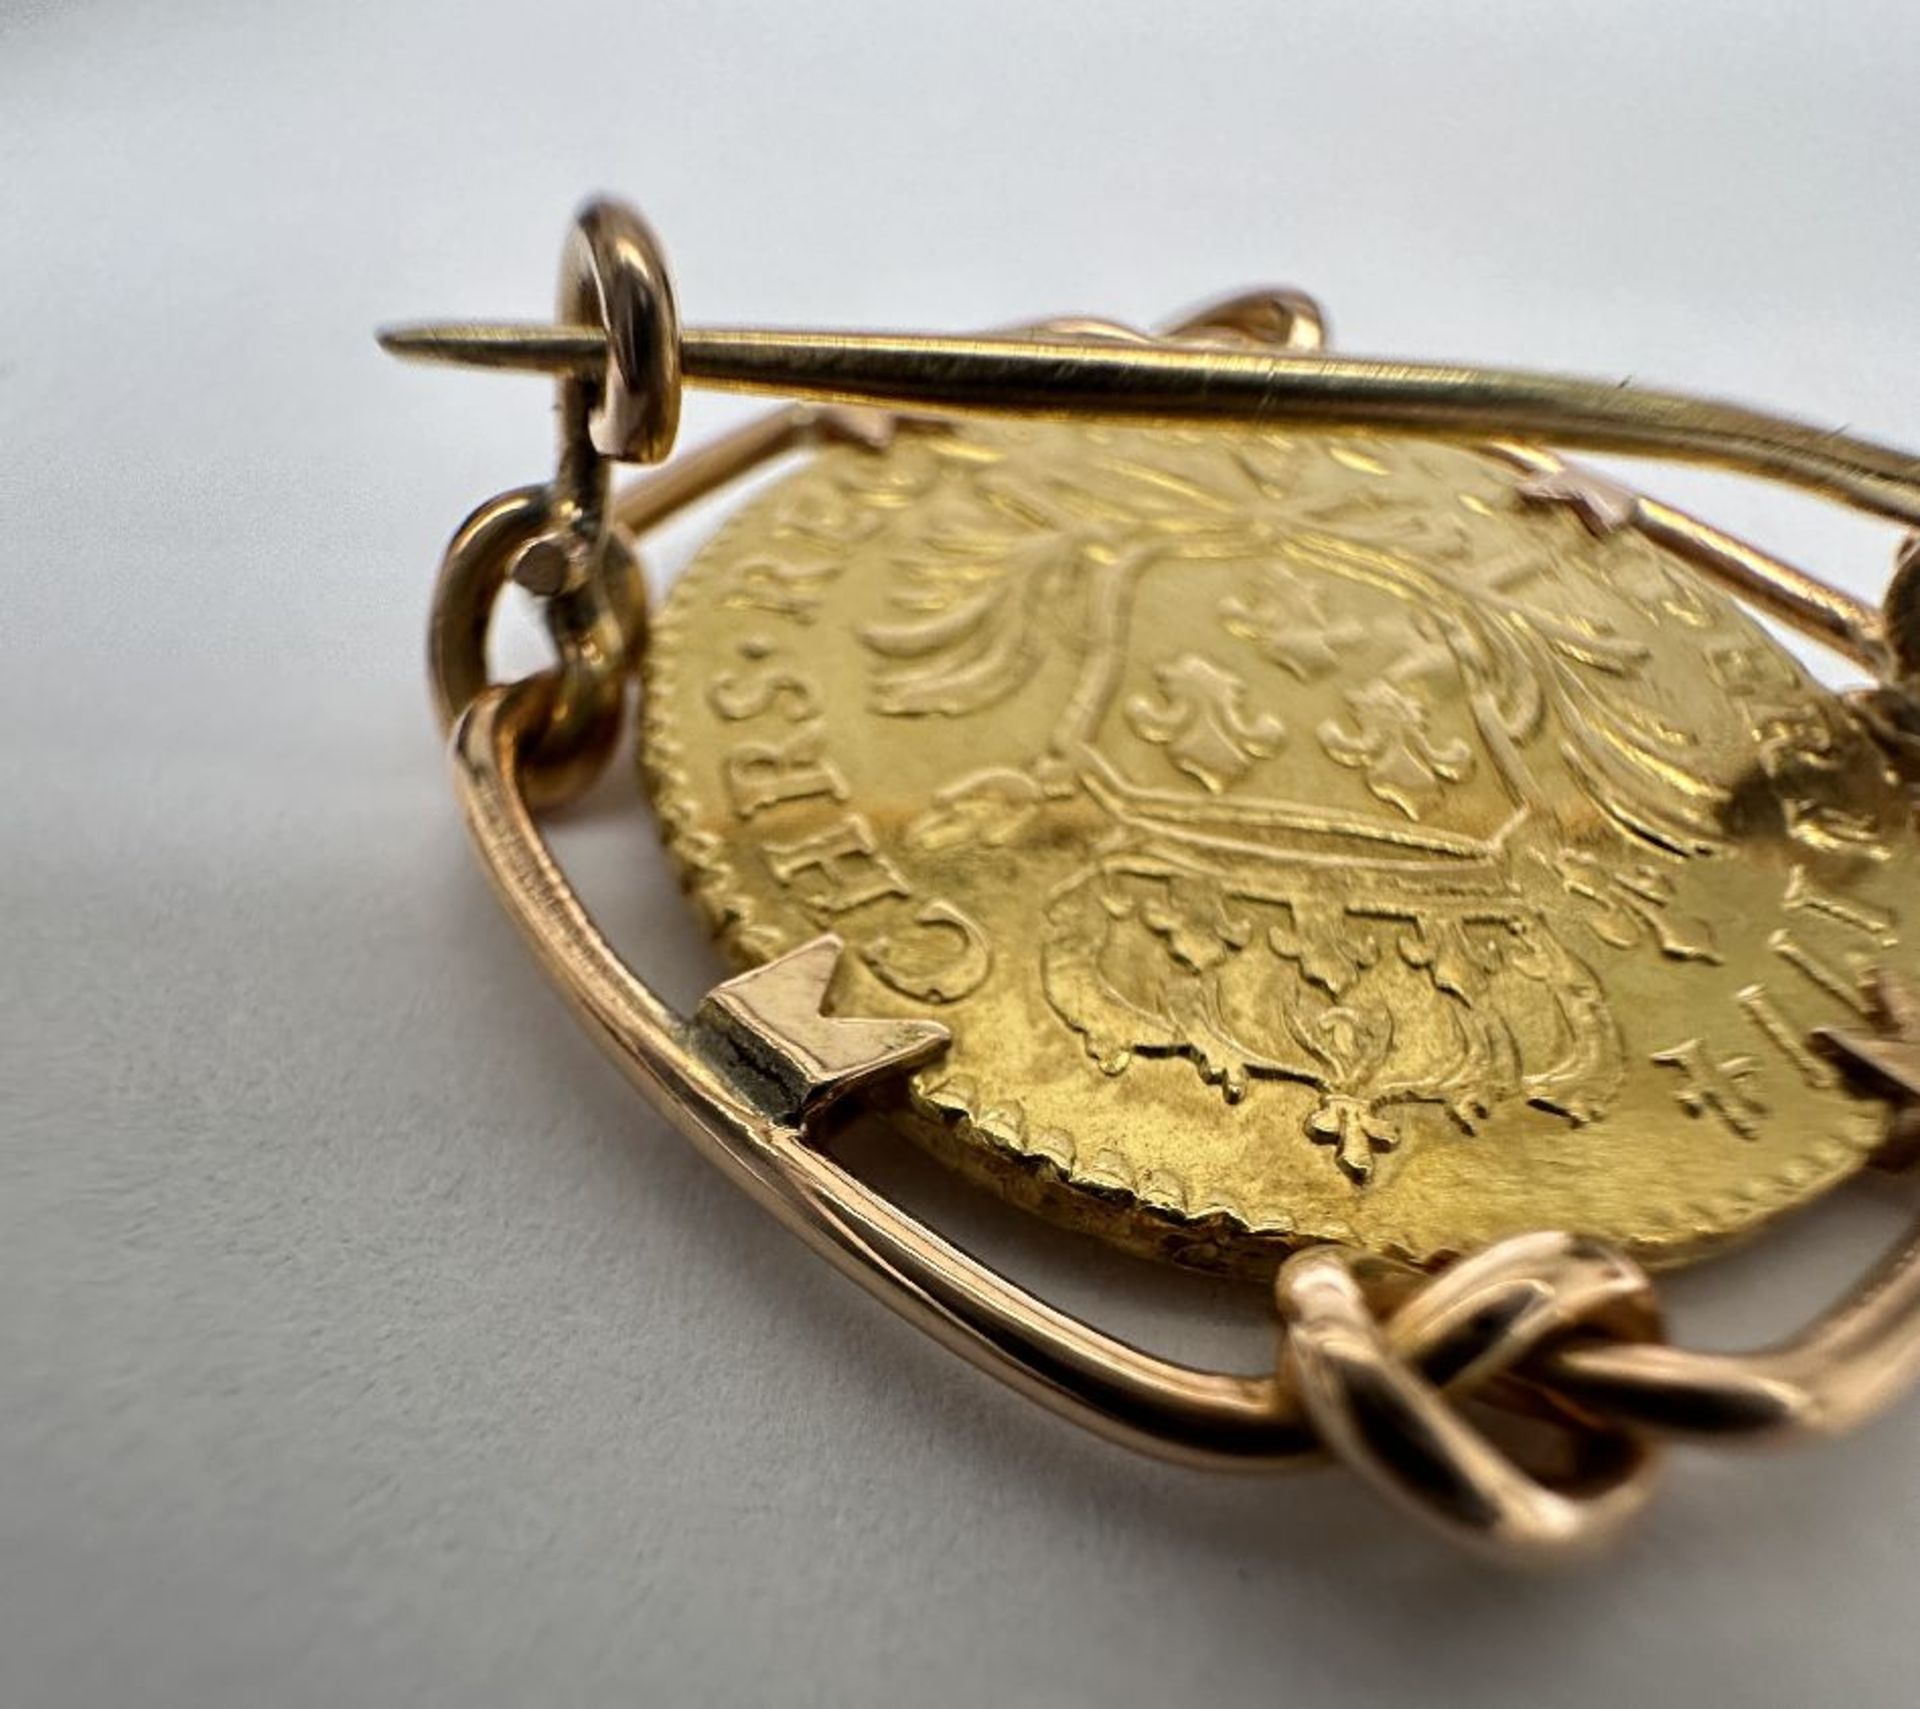 Louis XVI: Louis d'or aux palmes, a rare gold coin (Paris 1774) mounted as a brooch - Image 8 of 8